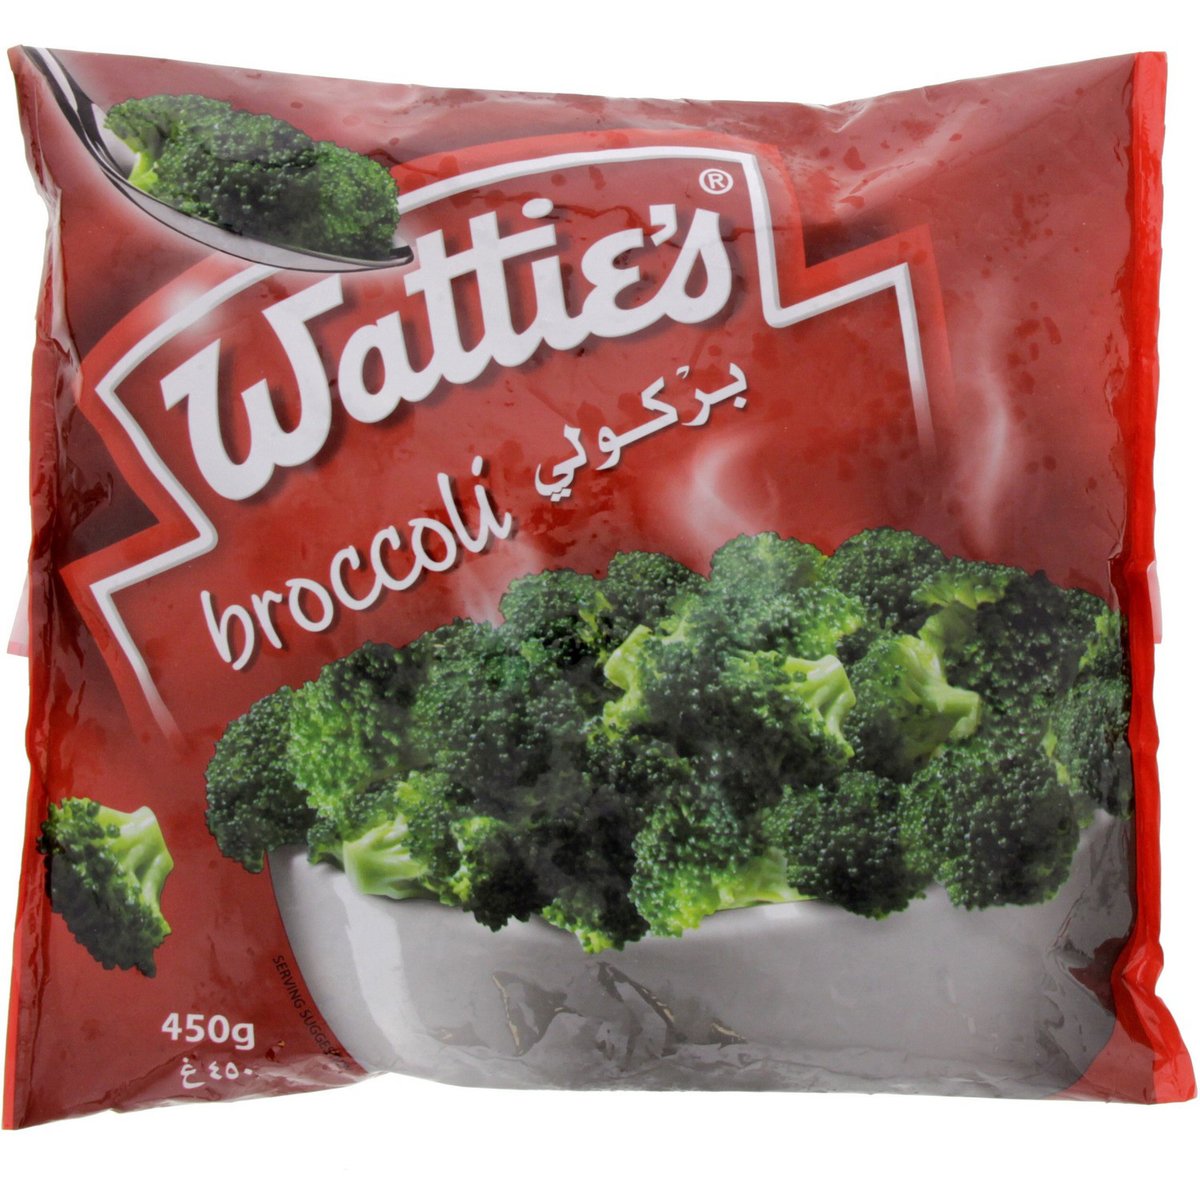 Watties Broccoli 450 g